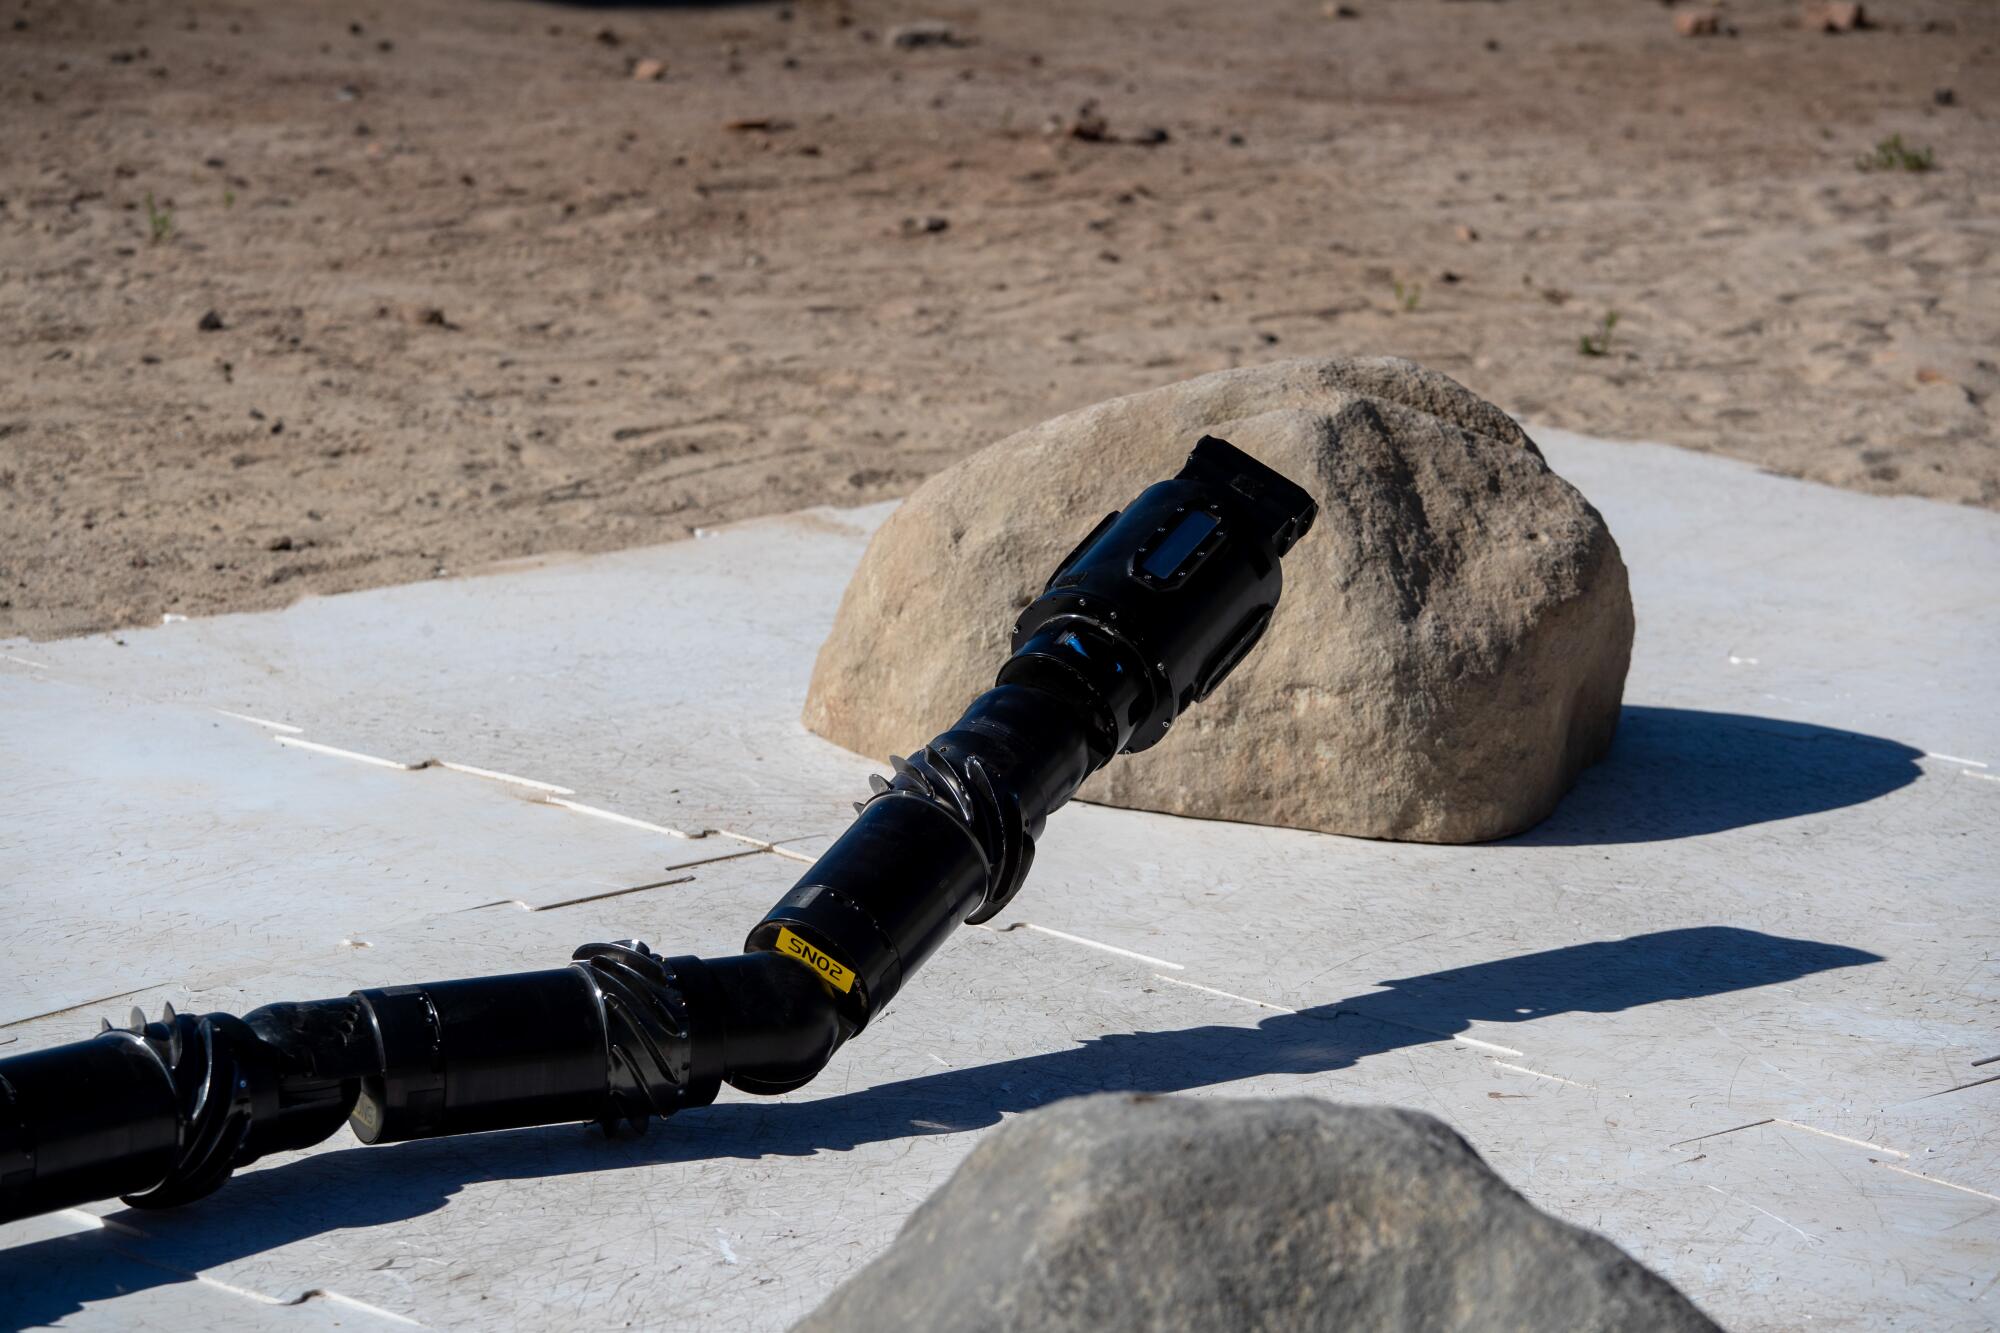 A long, black object raises it front part between two rocks.